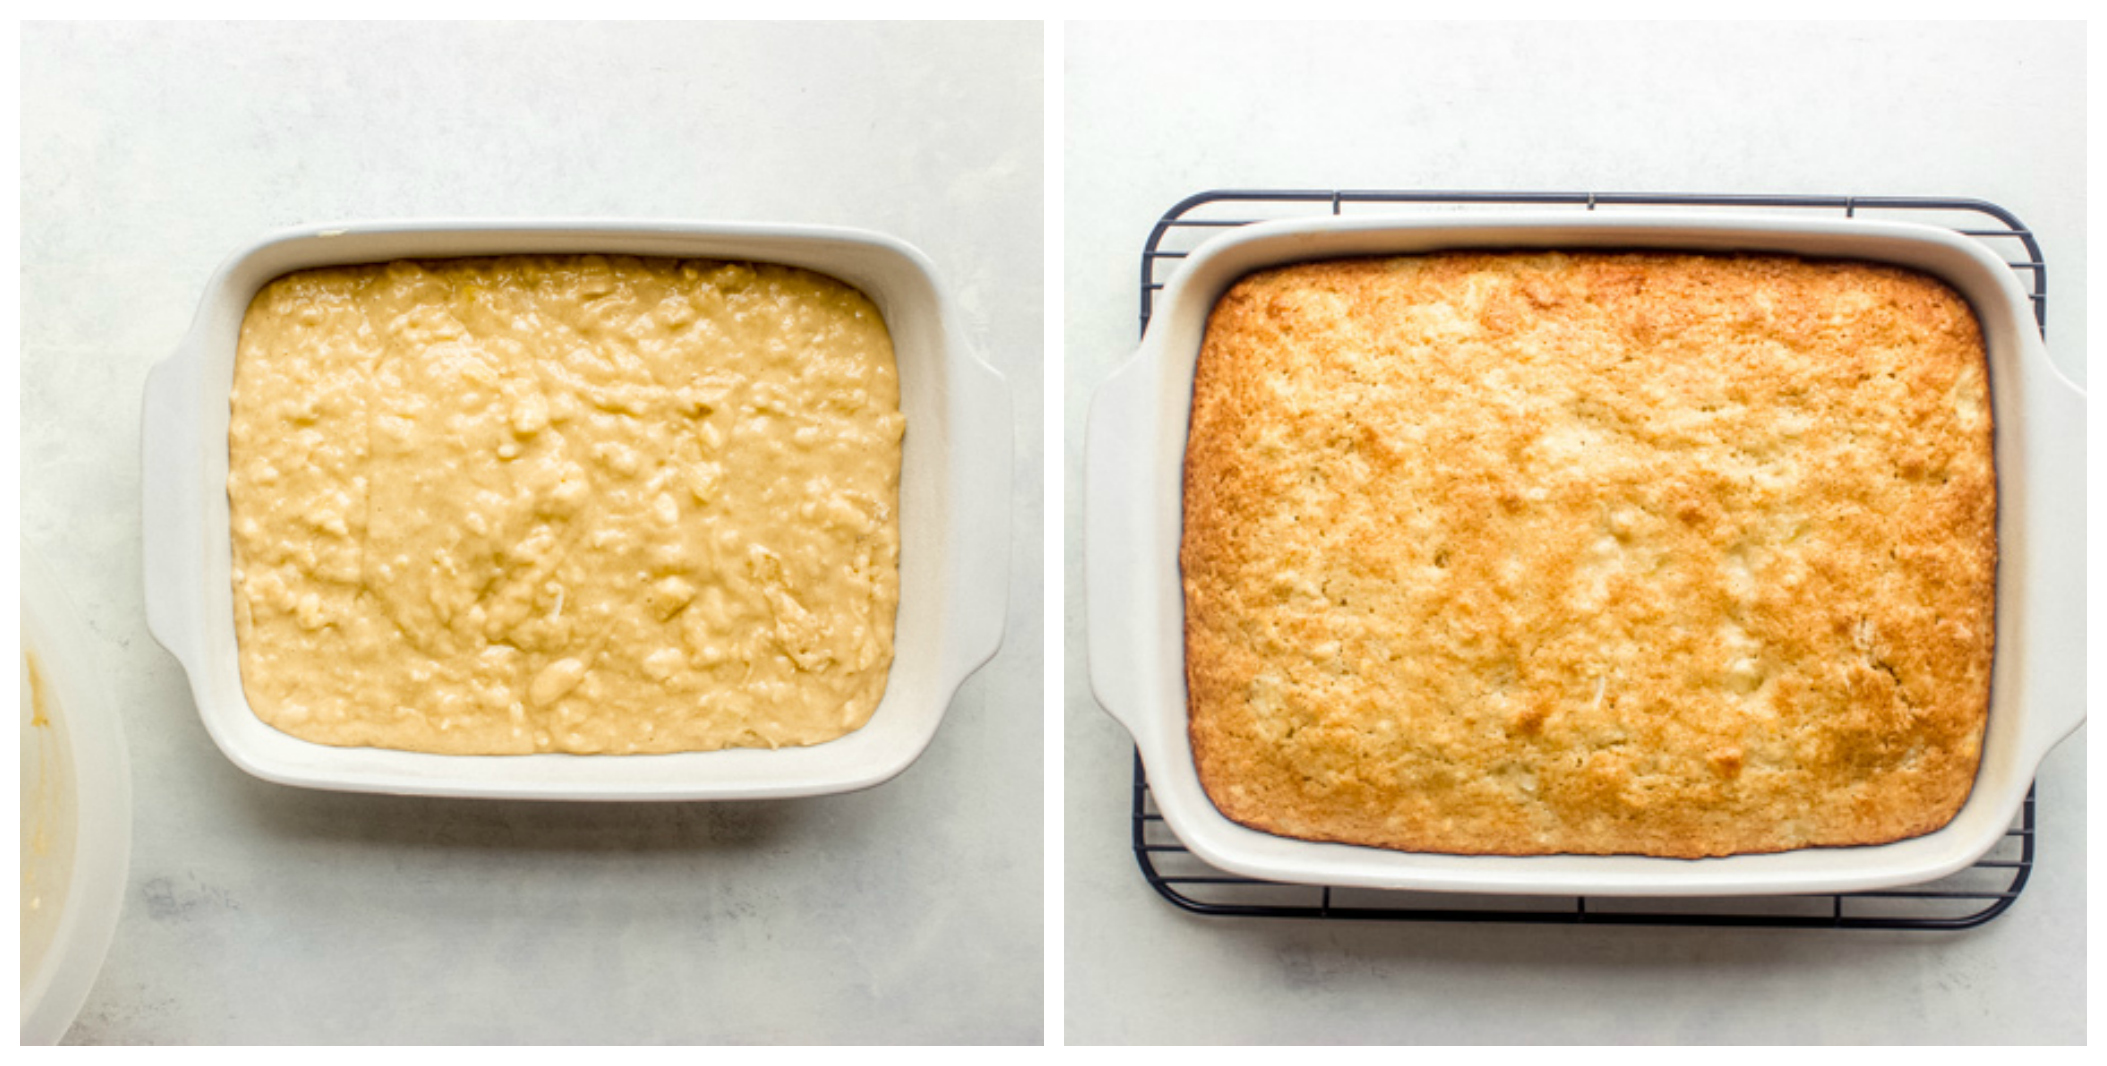 Texas Sheet Cake Recipe for 9 x 13 Inch Pan » Hummingbird High